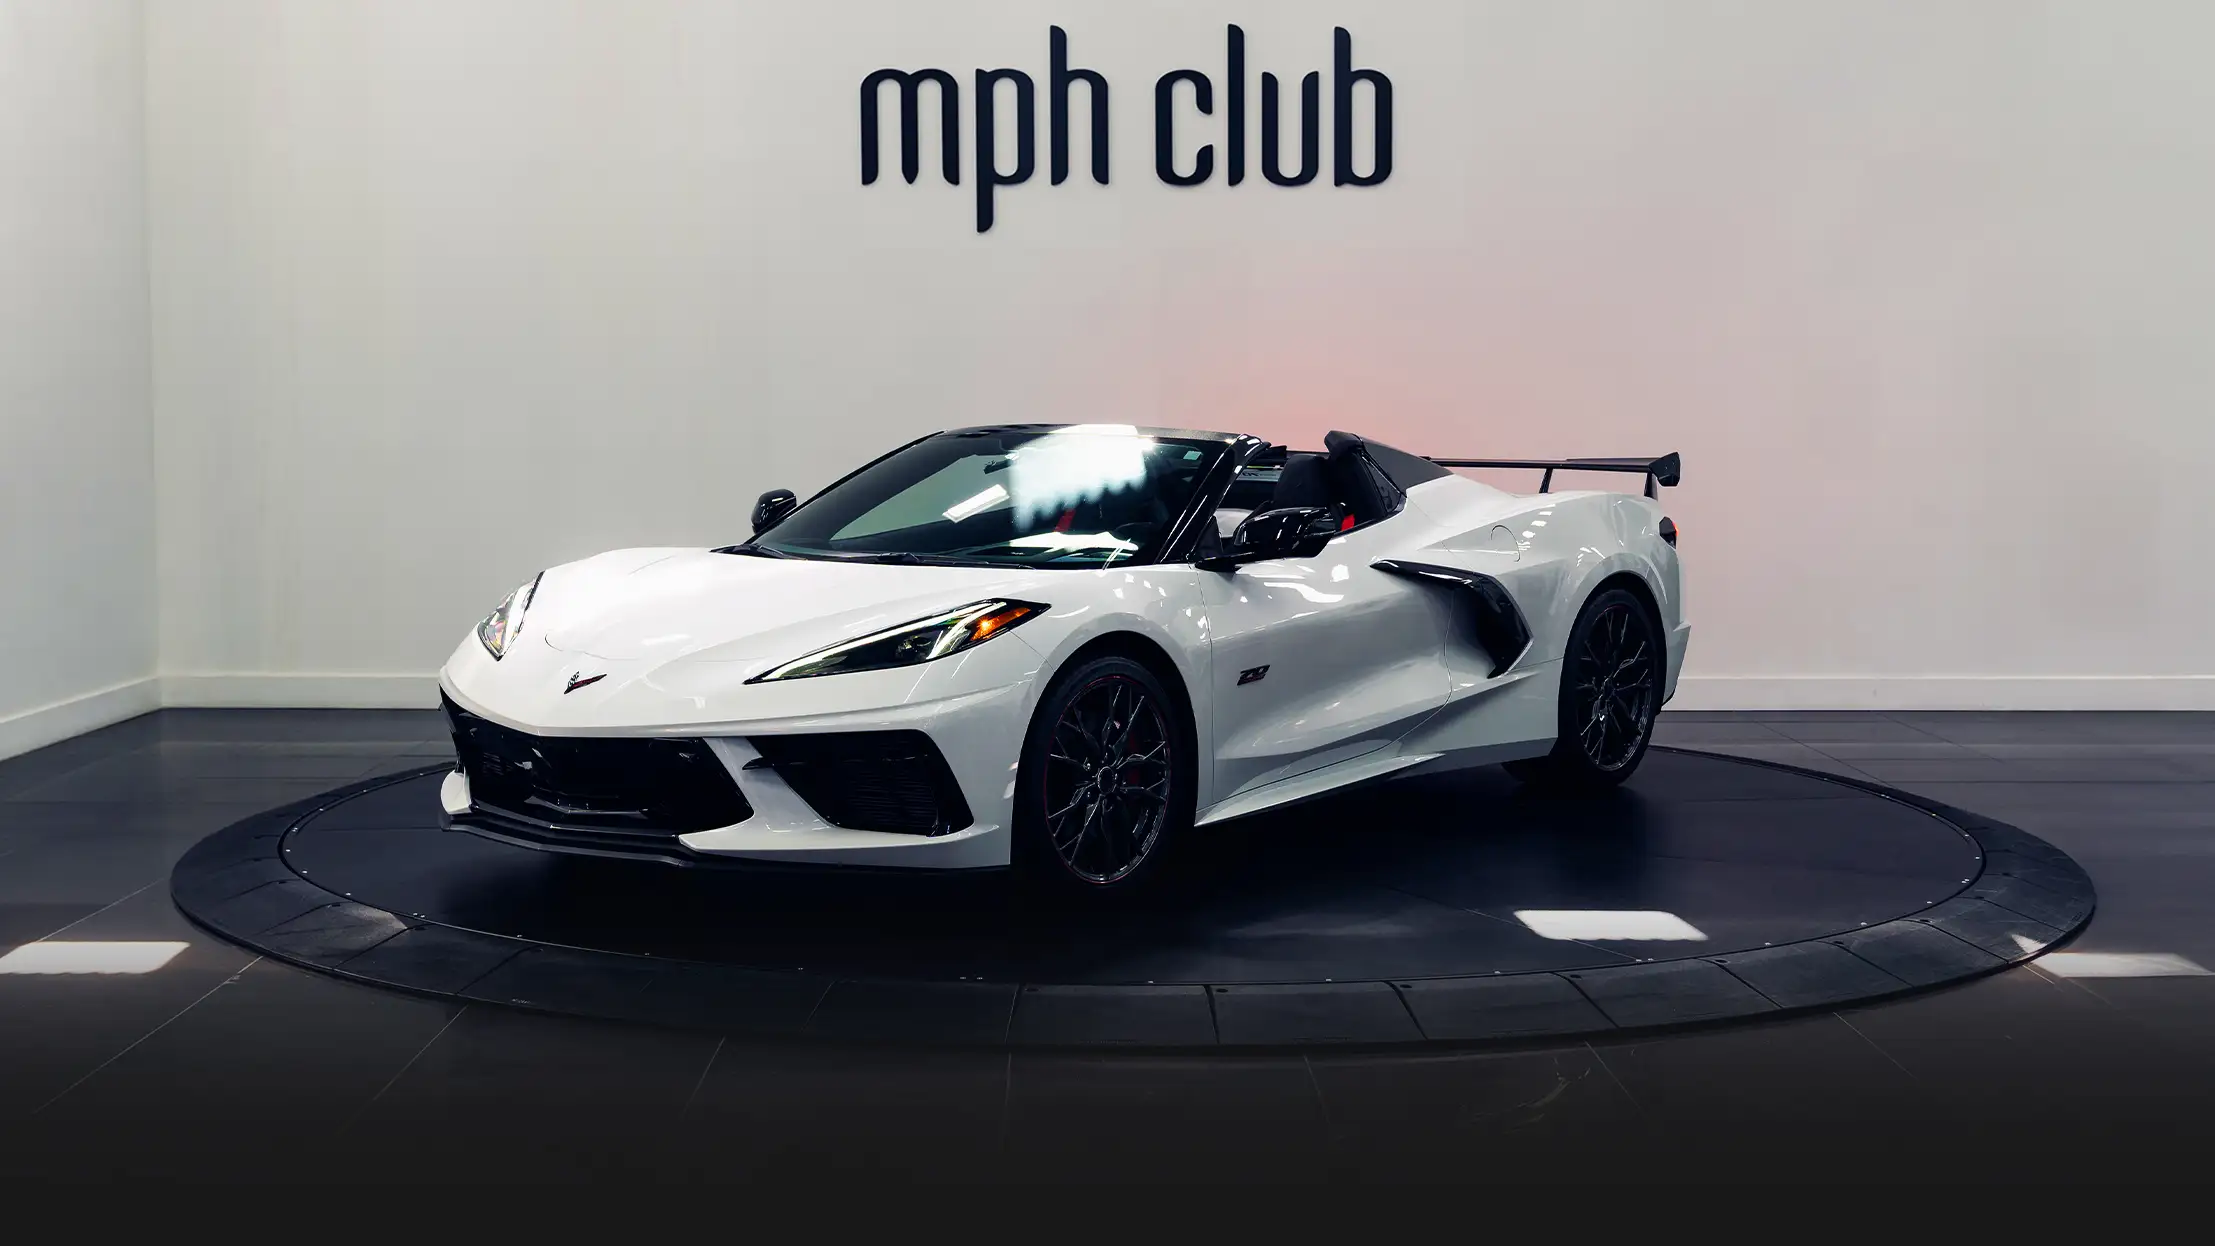 White on white Chevrolet Corvette C8 rental profile view - mph club